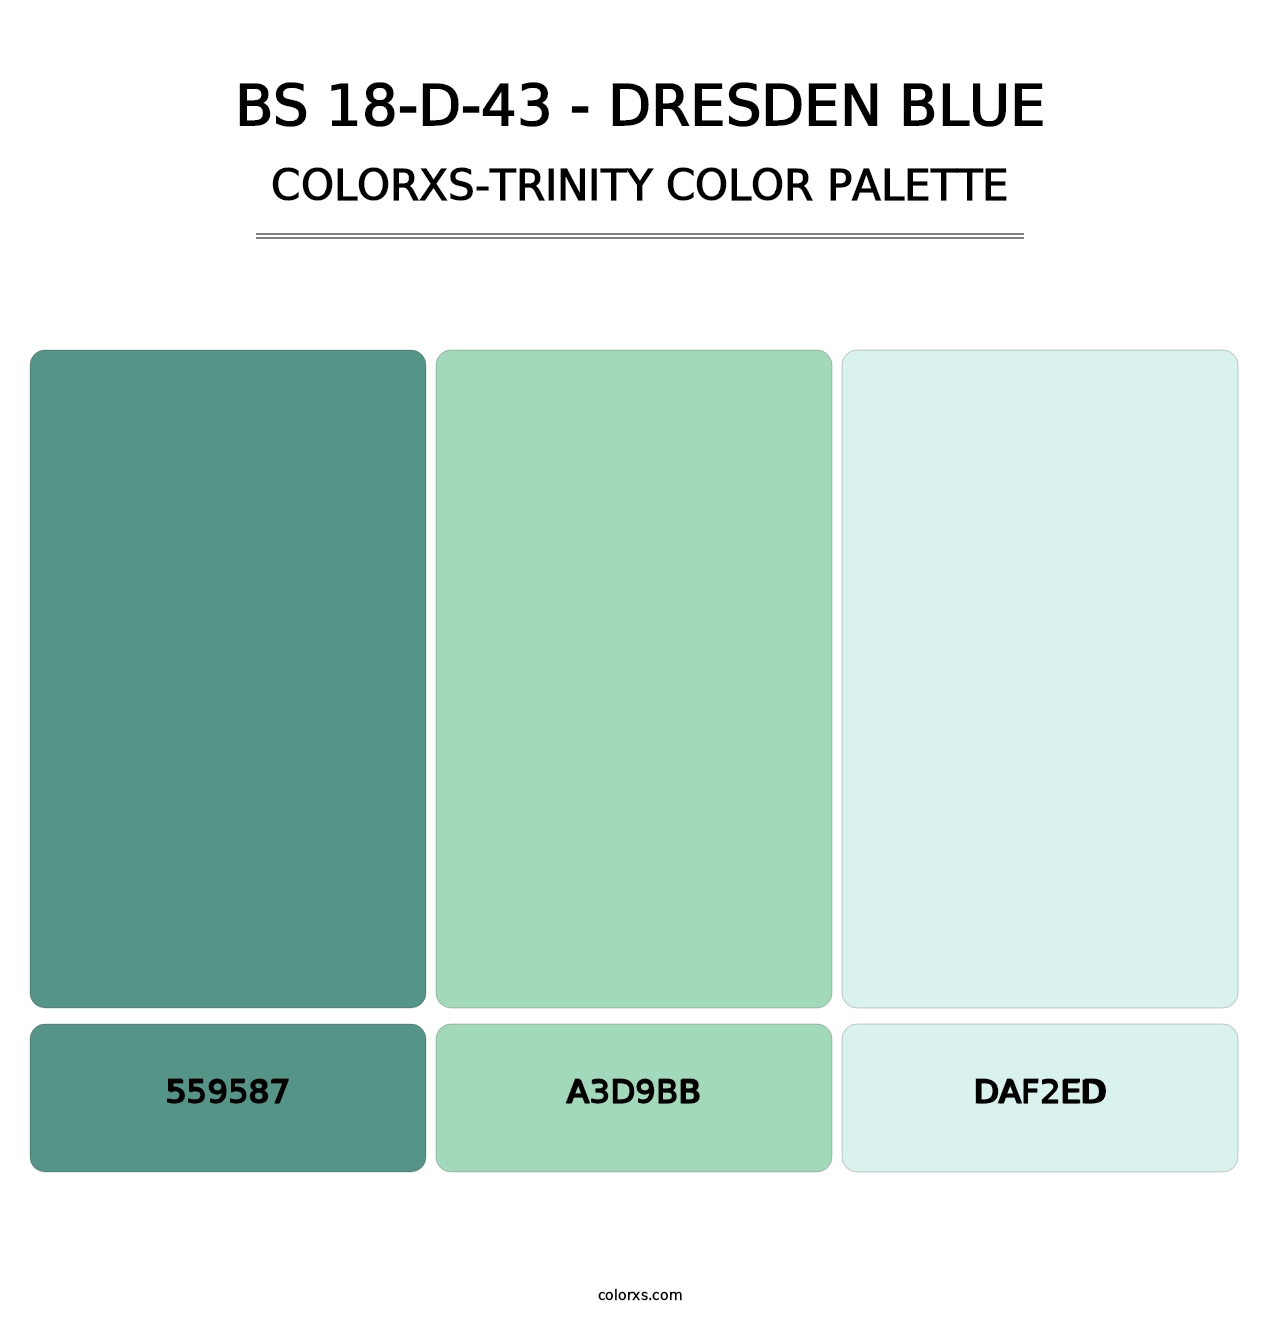 BS 18-D-43 - Dresden Blue - Colorxs Trinity Palette